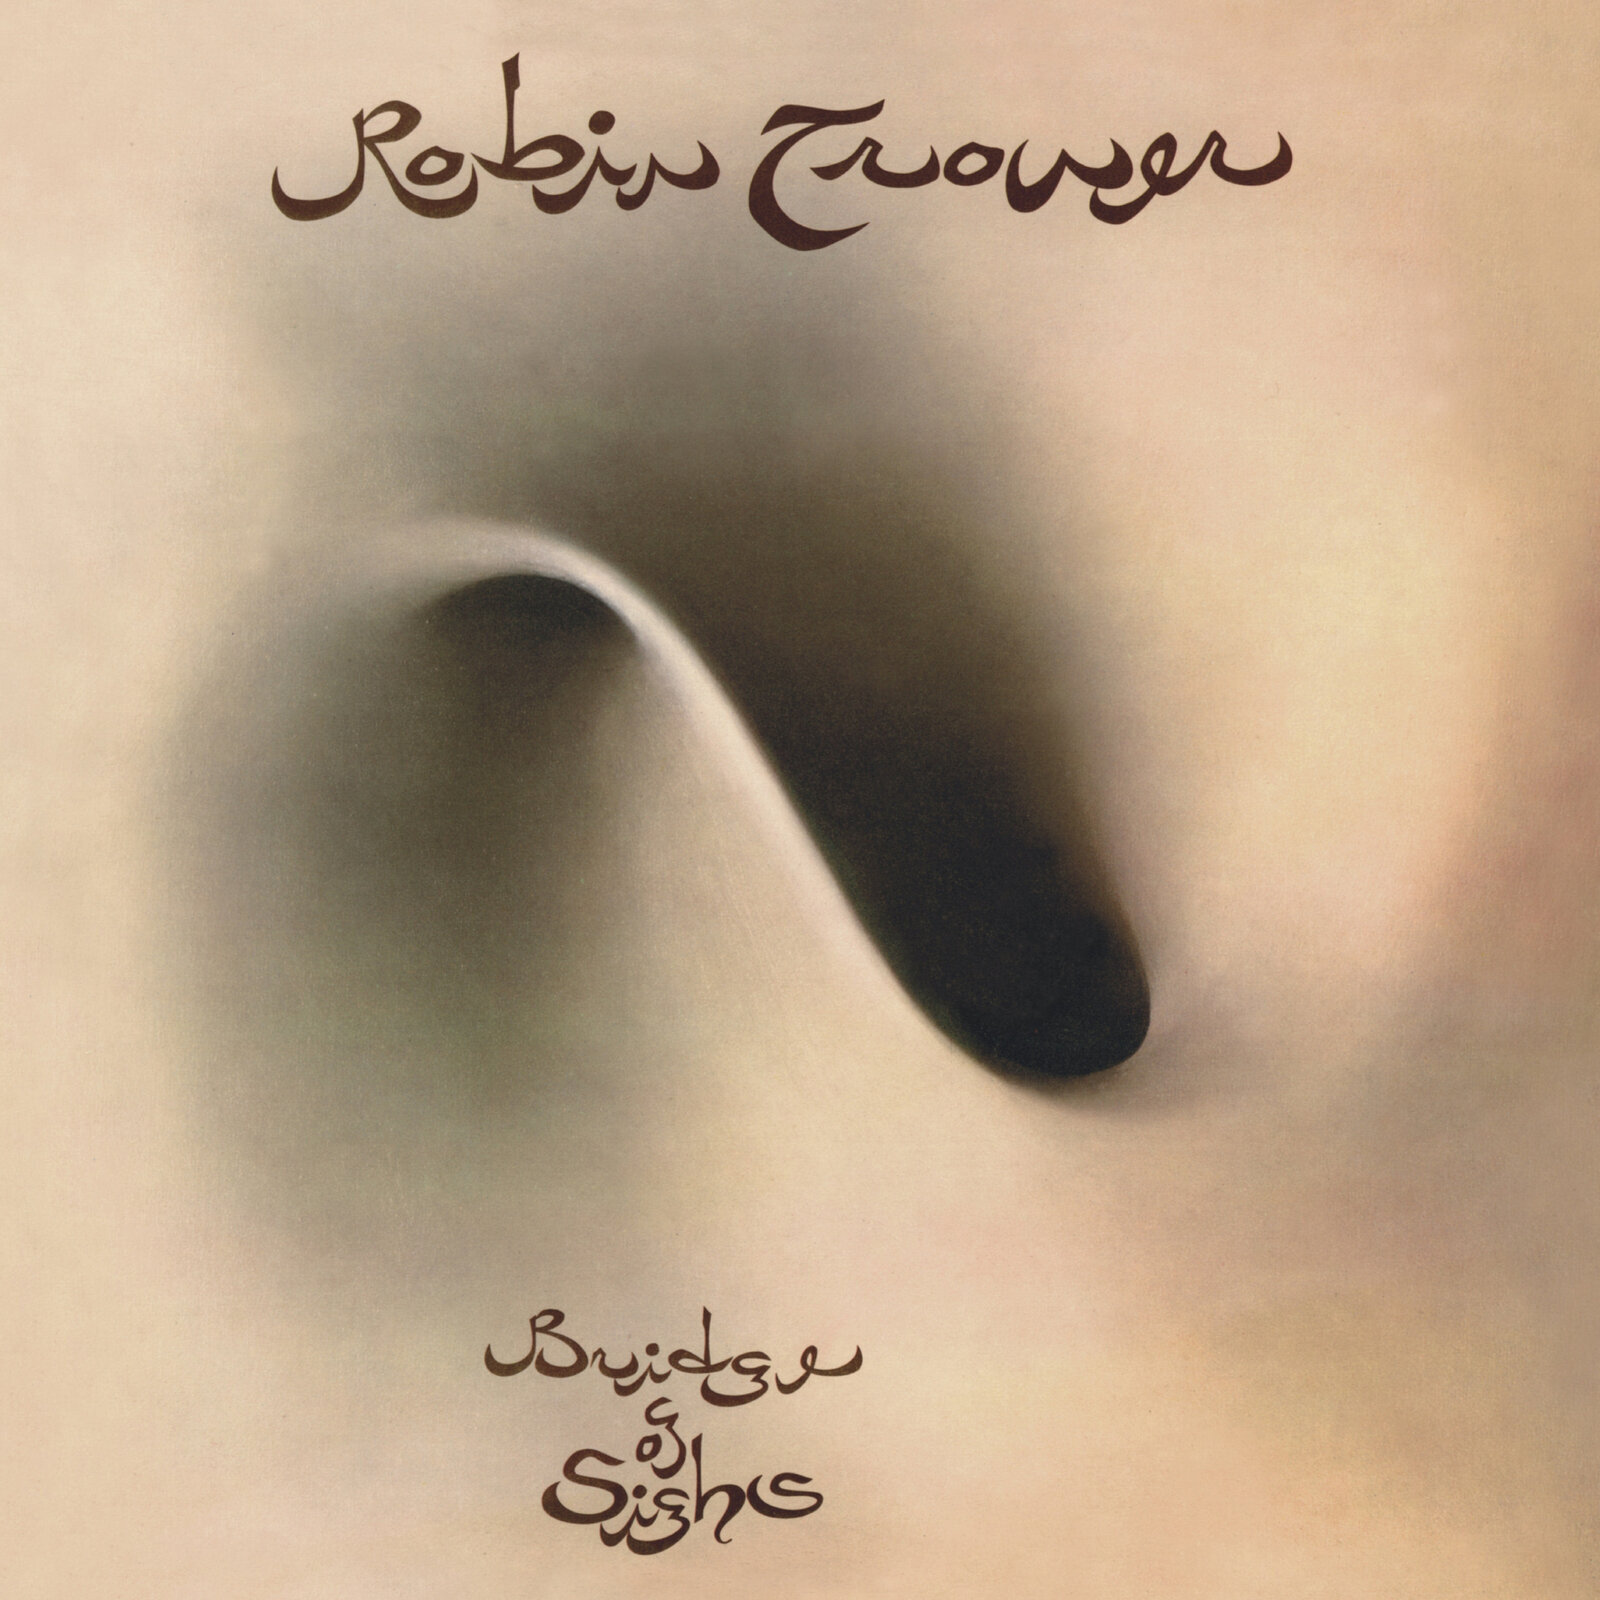 Vinyl Record Robin Trower - Bridge of Sighs (50th Anniversary Edition) (High Quality) (2 LP)